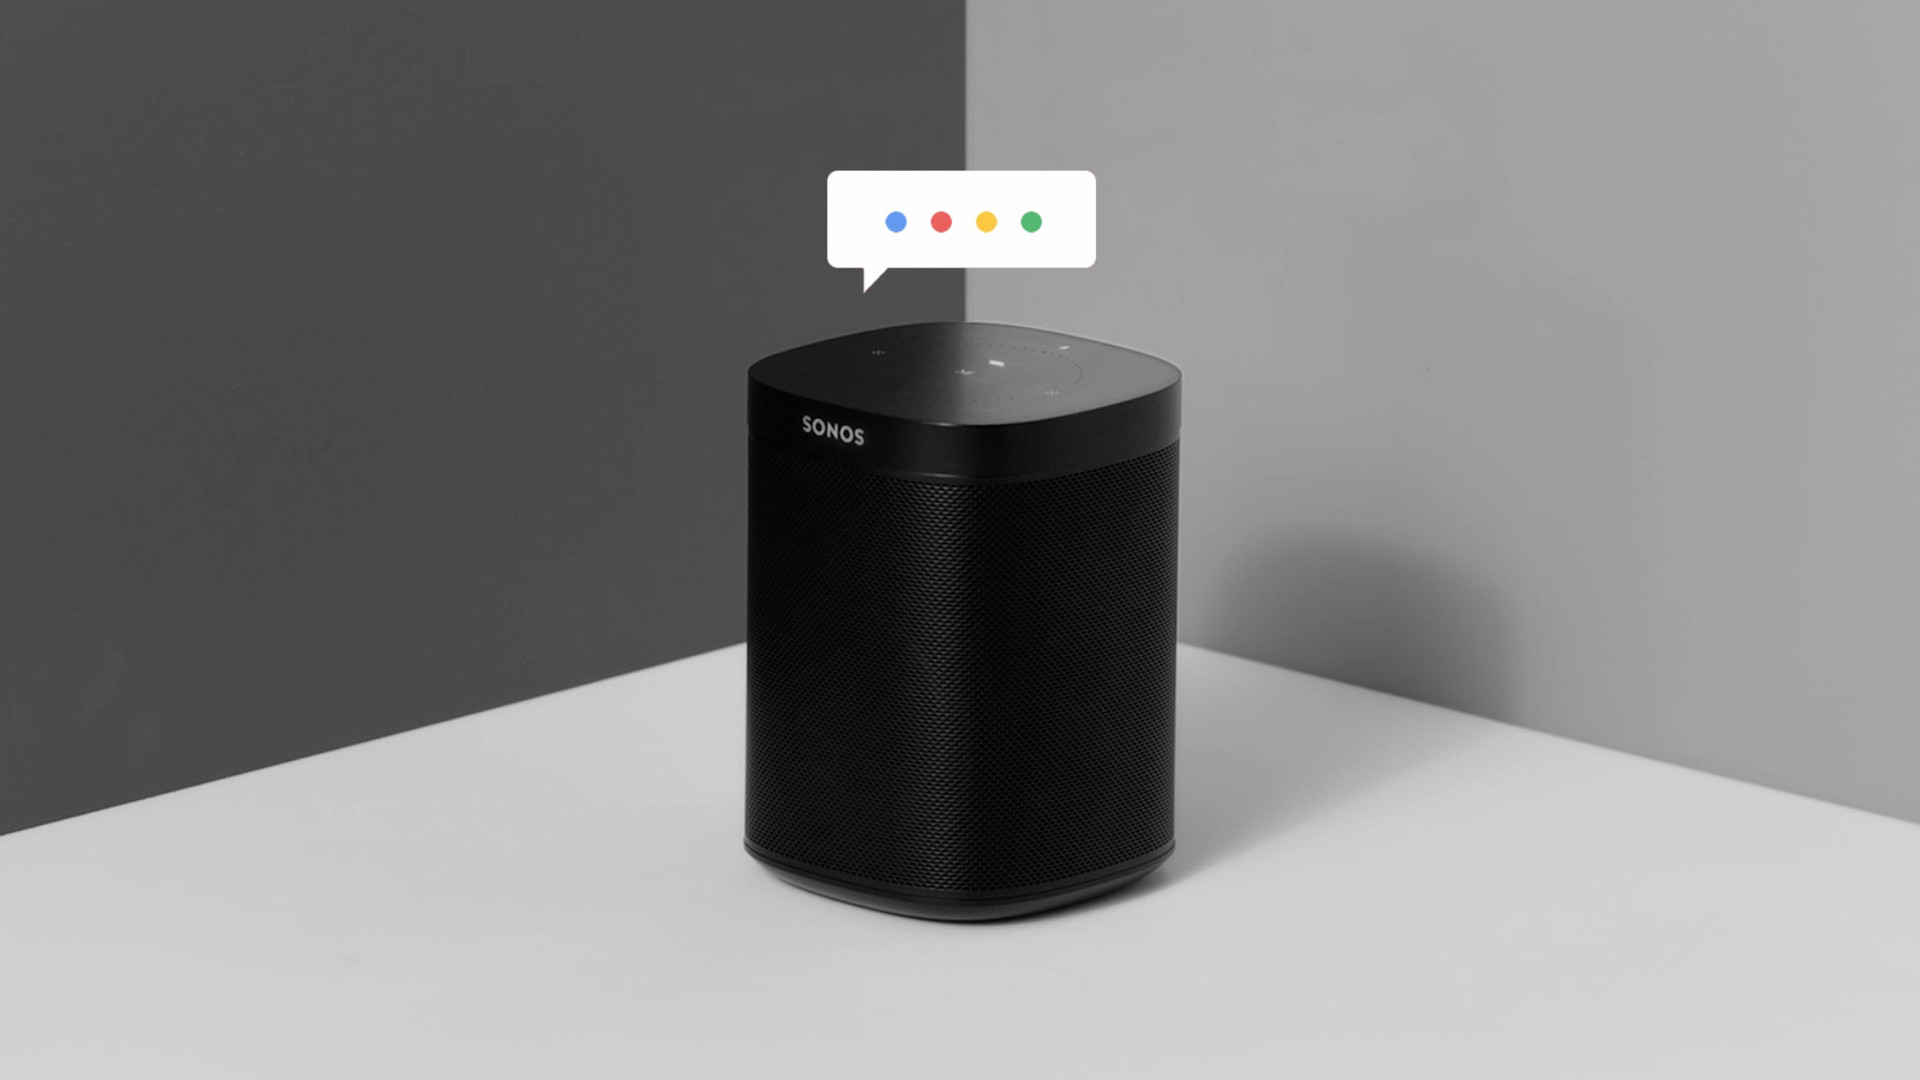 Sonos One Google Assistant